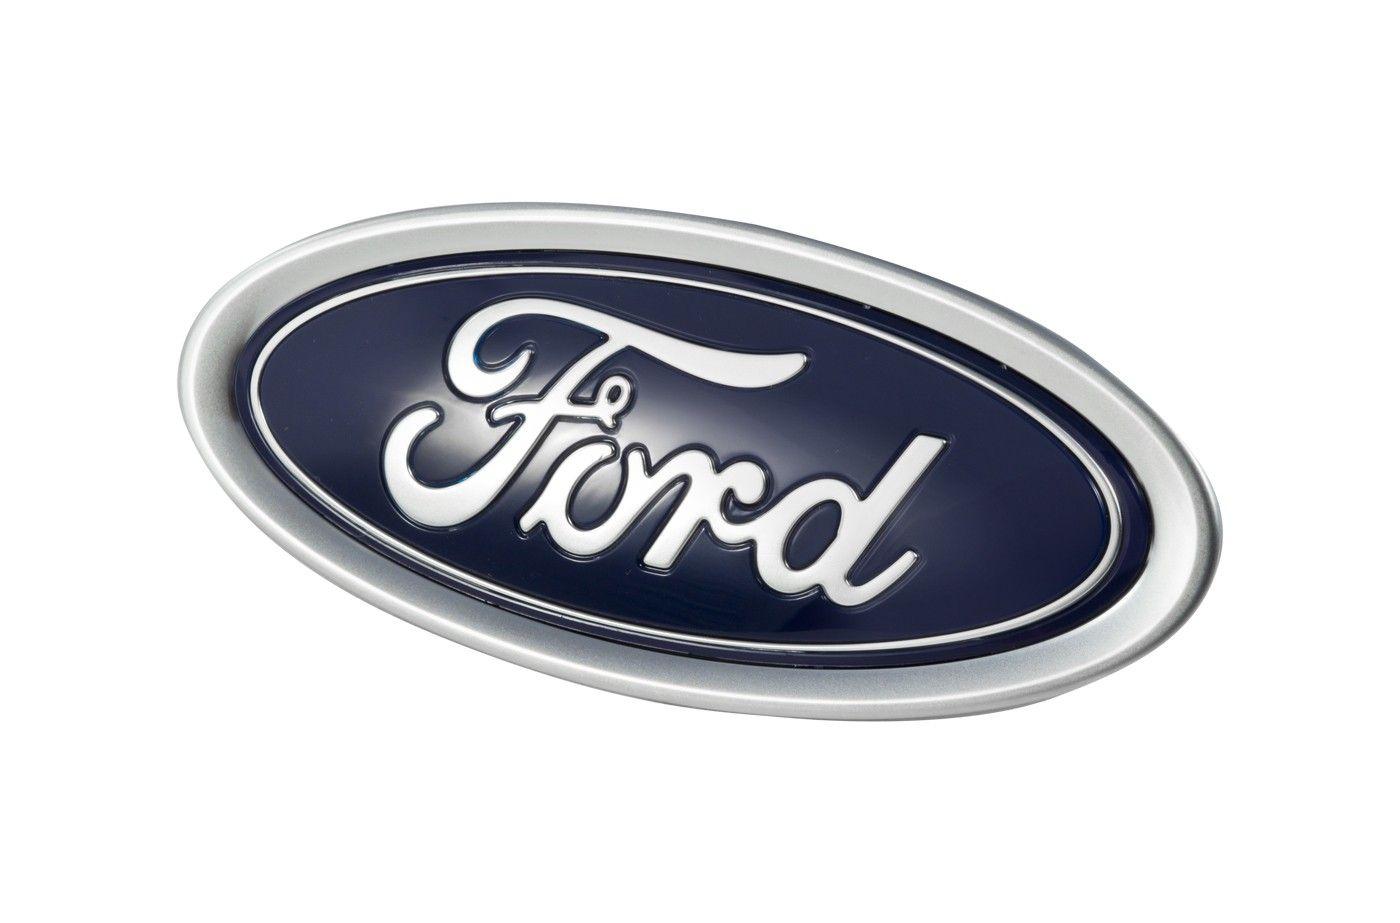 2017 Ford Logo - 2017 Ford GT Supercar Genuine Ford Oval Front Bumper Logo Emblem Decal